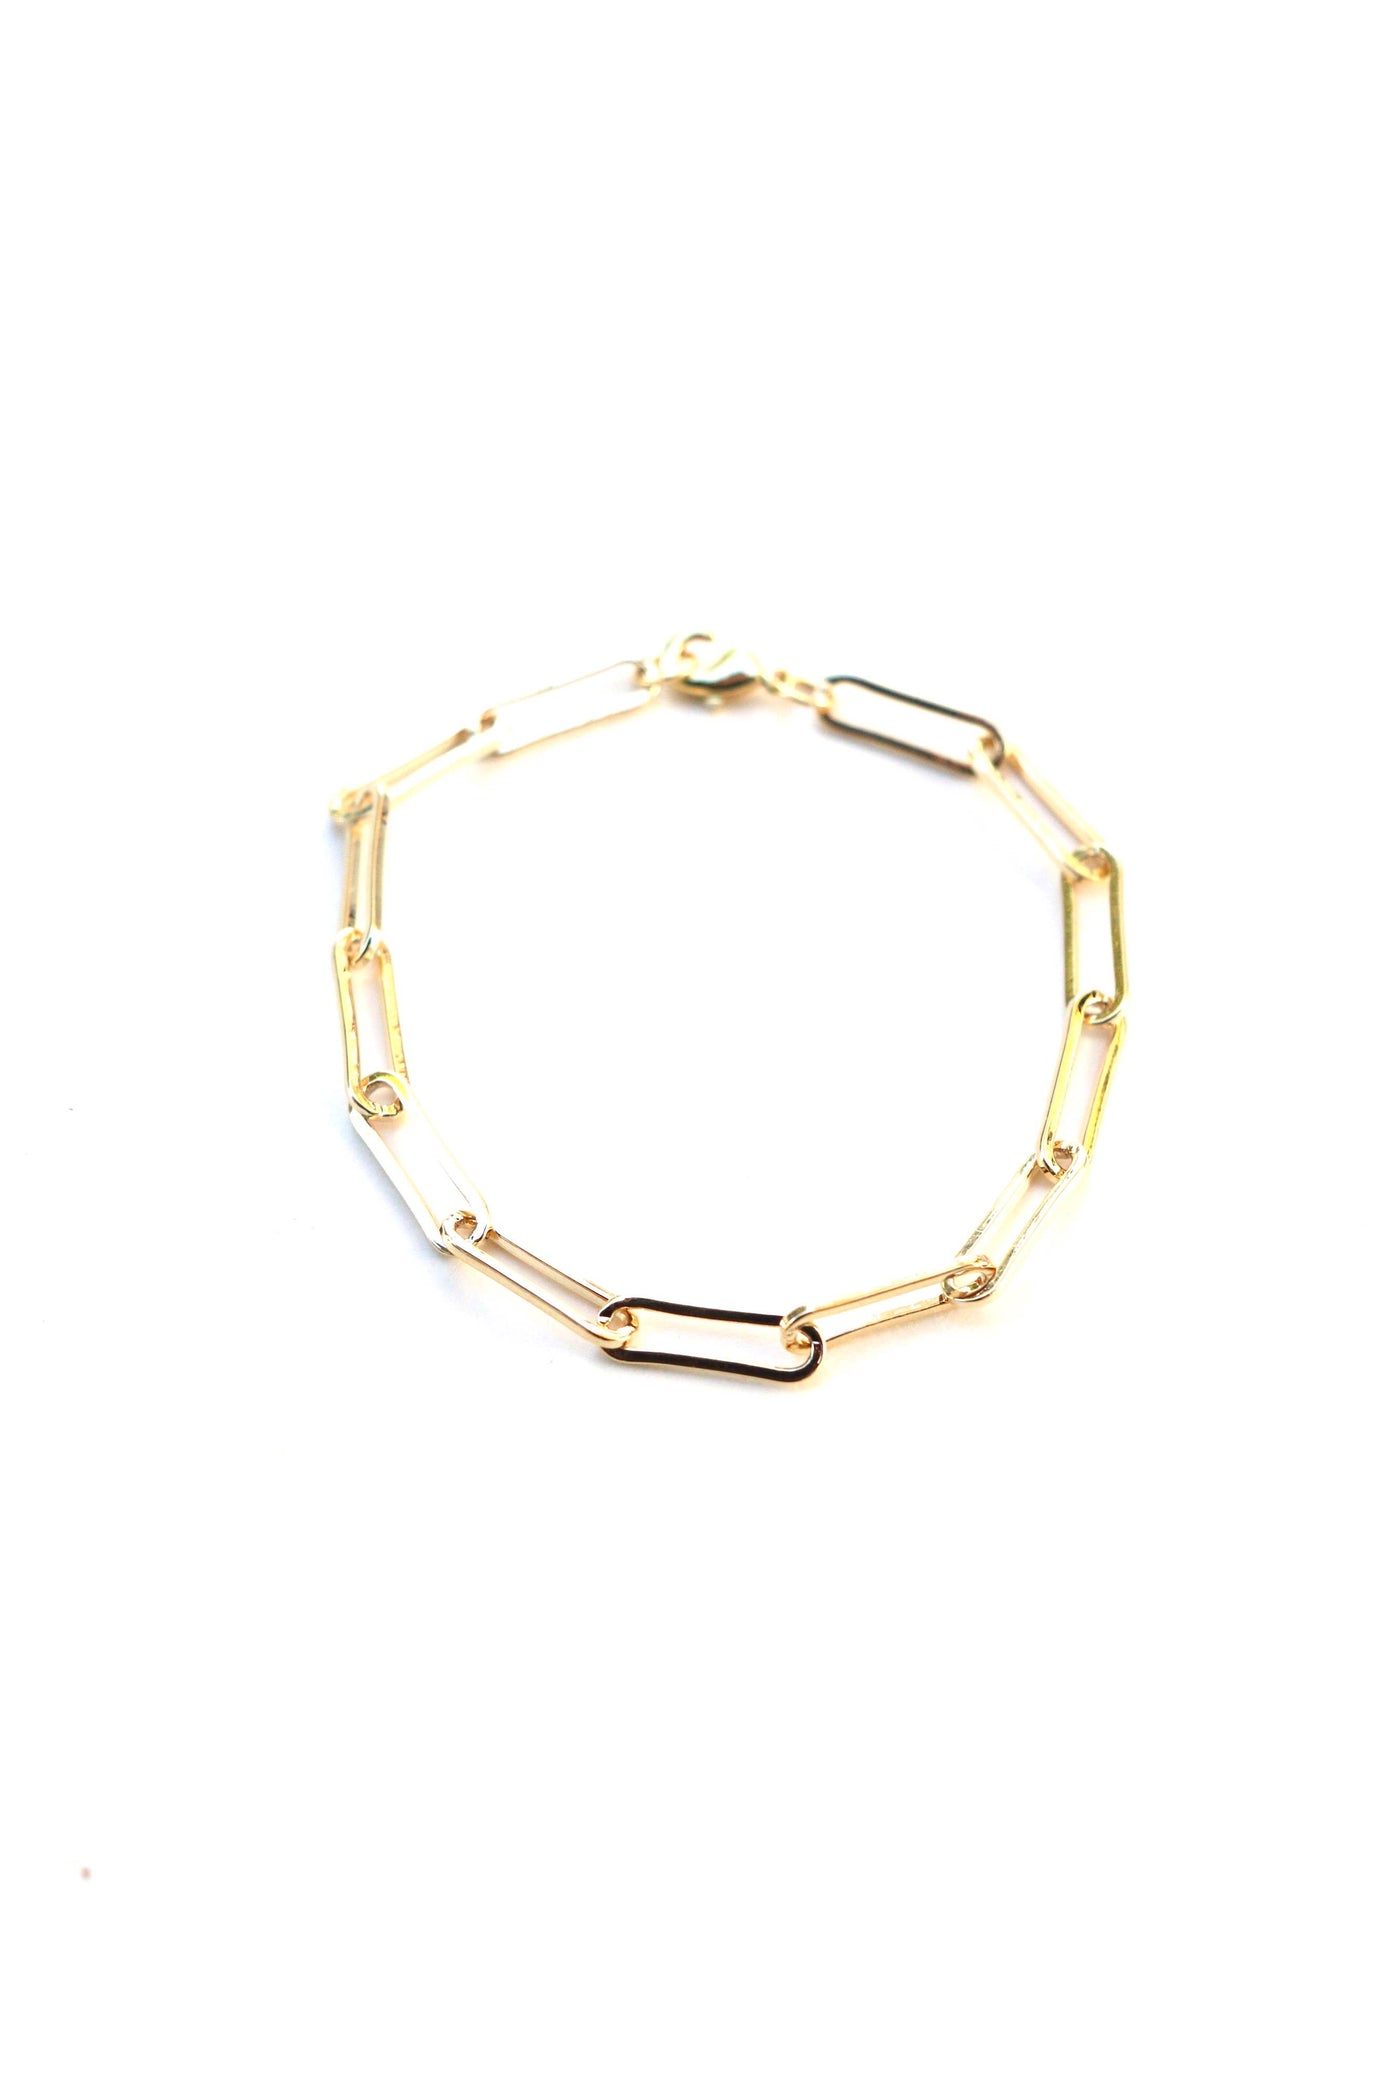 Cedar and Cypress Designs - Paper Clip Gold Chain Bracelet